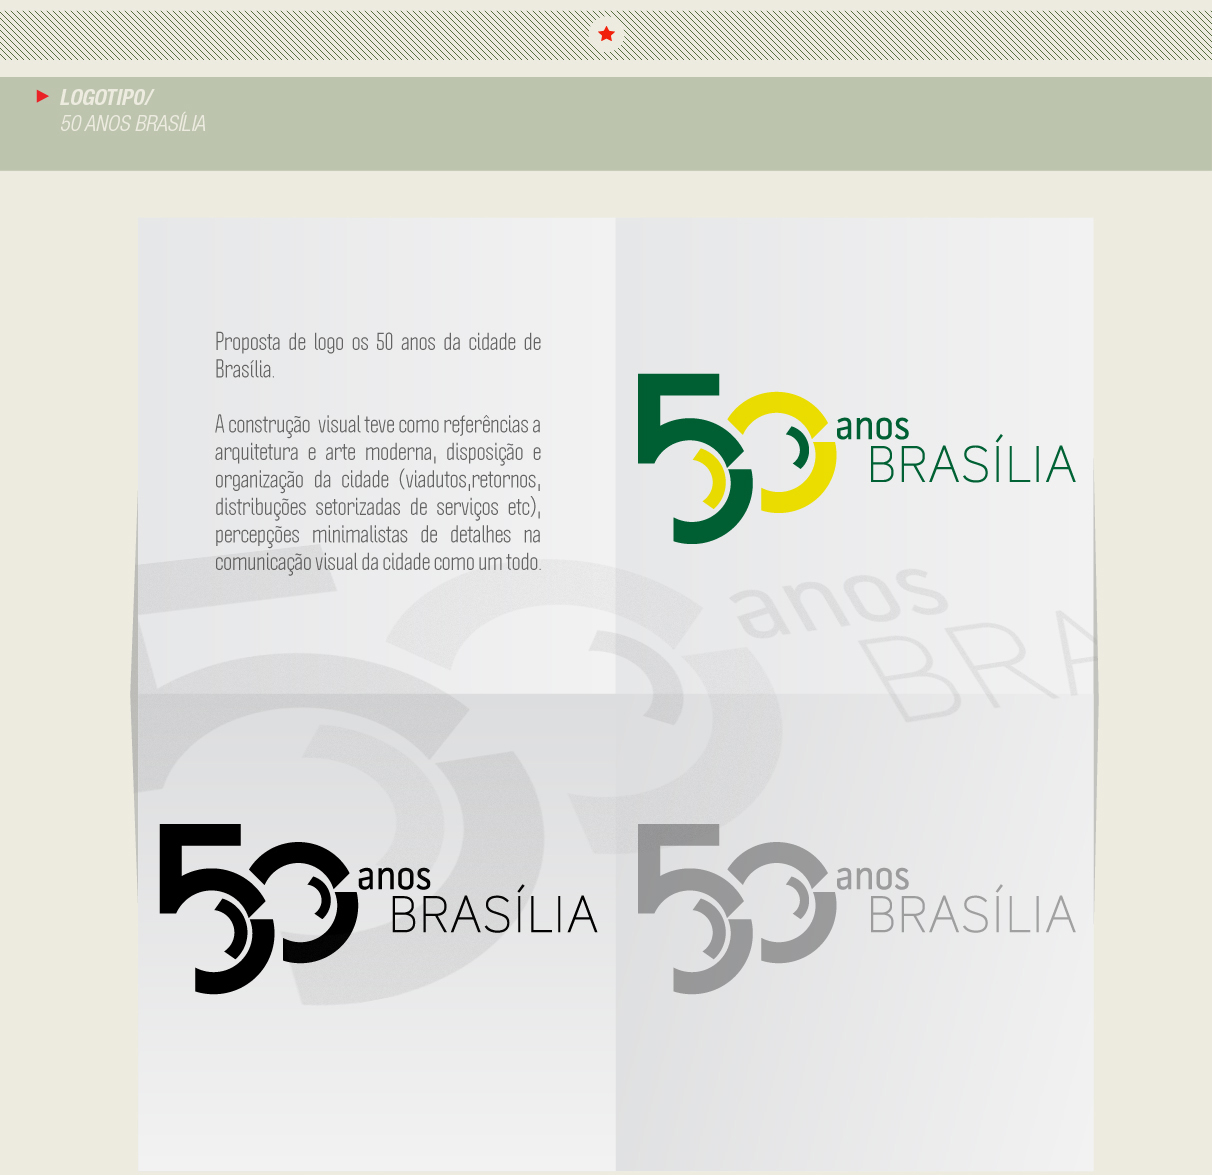 Logomarca - 50 anos de Brasília